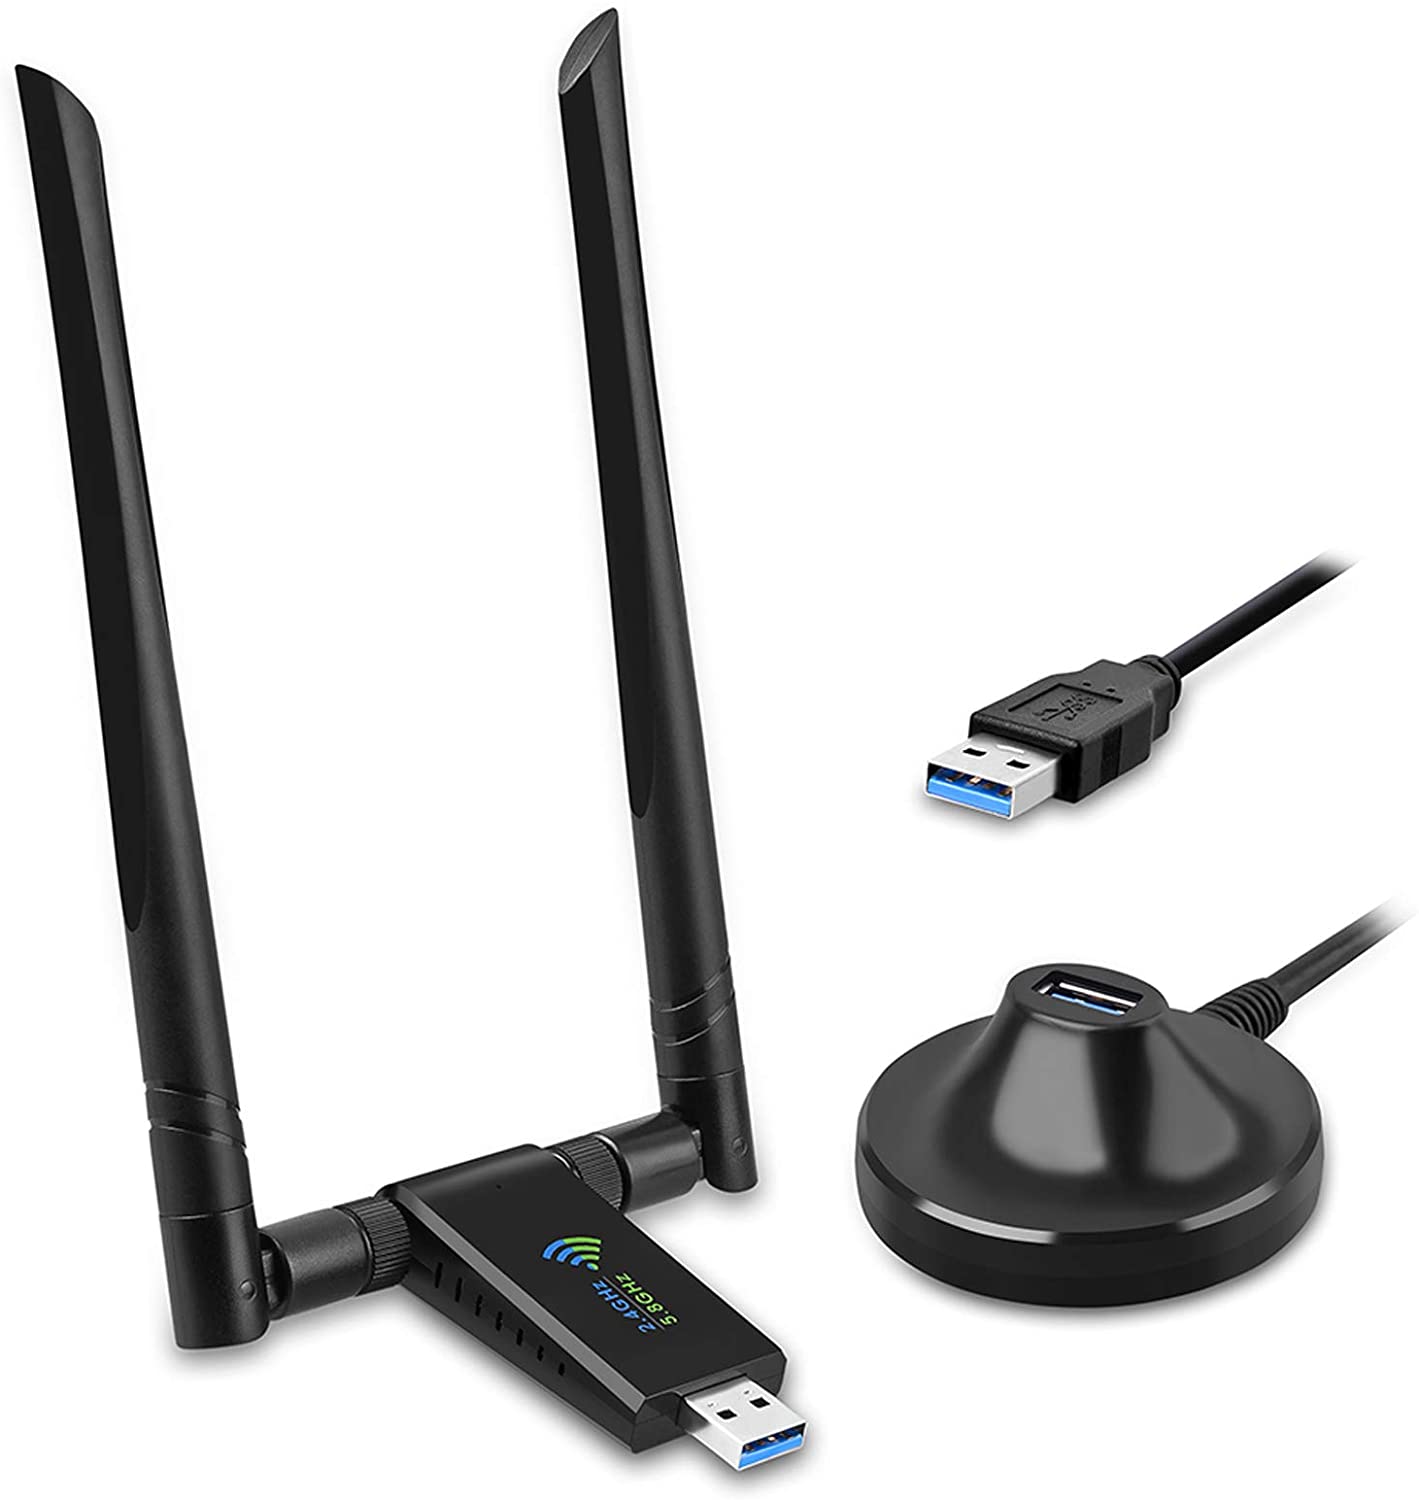 Techkey Ultra Fast Easy Install USB WiFi Adapter Antenna